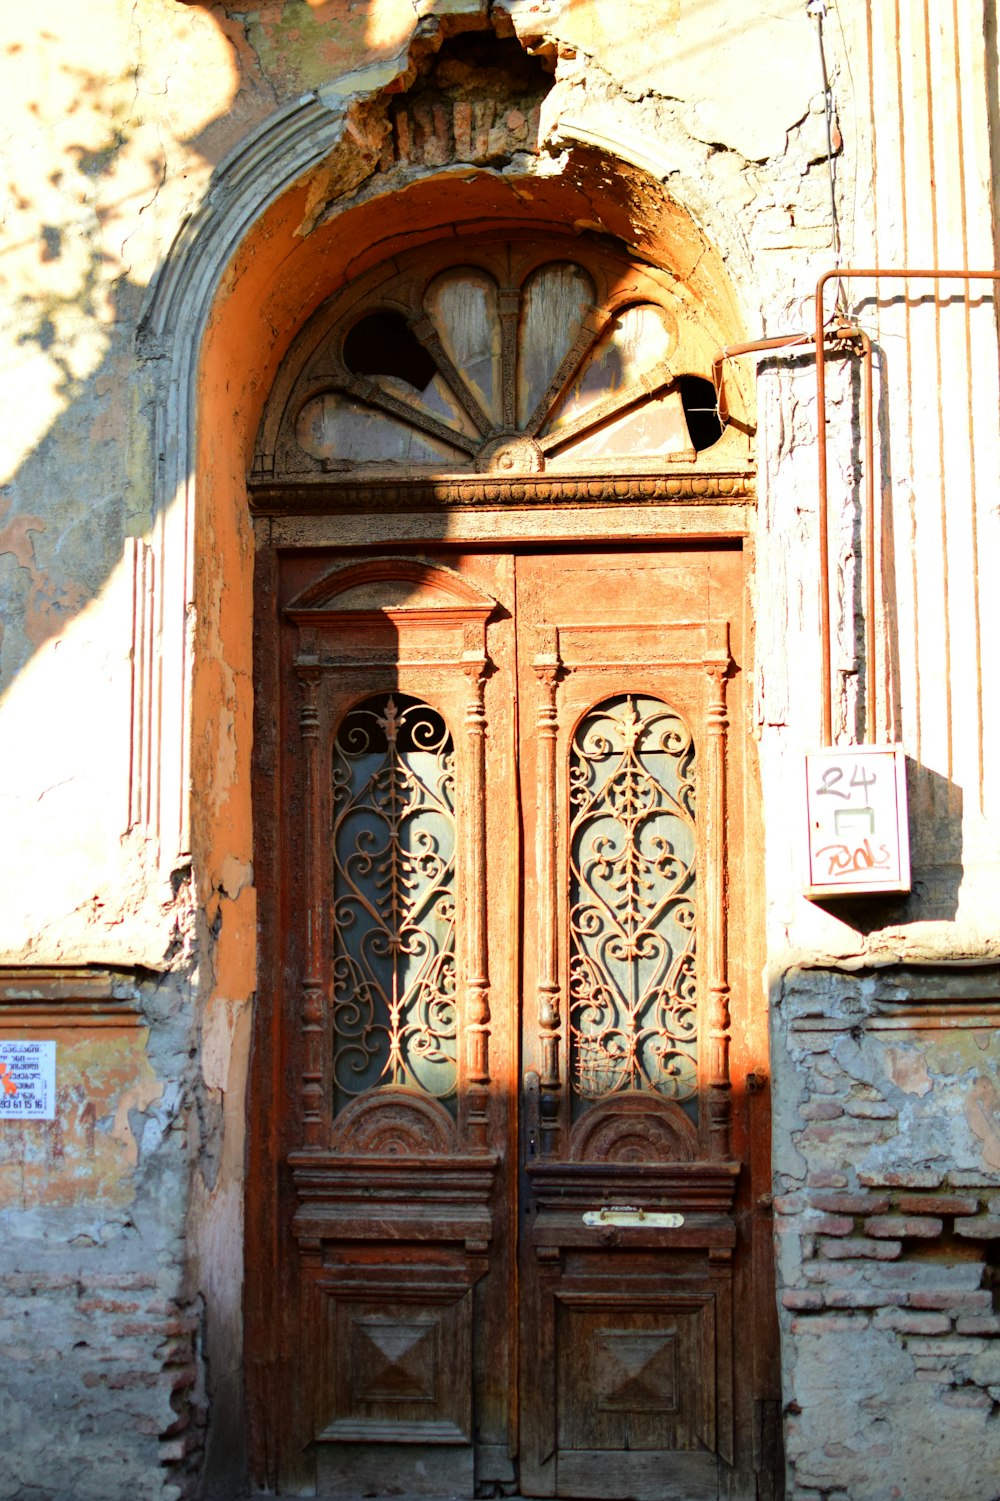 a wooden door with a window